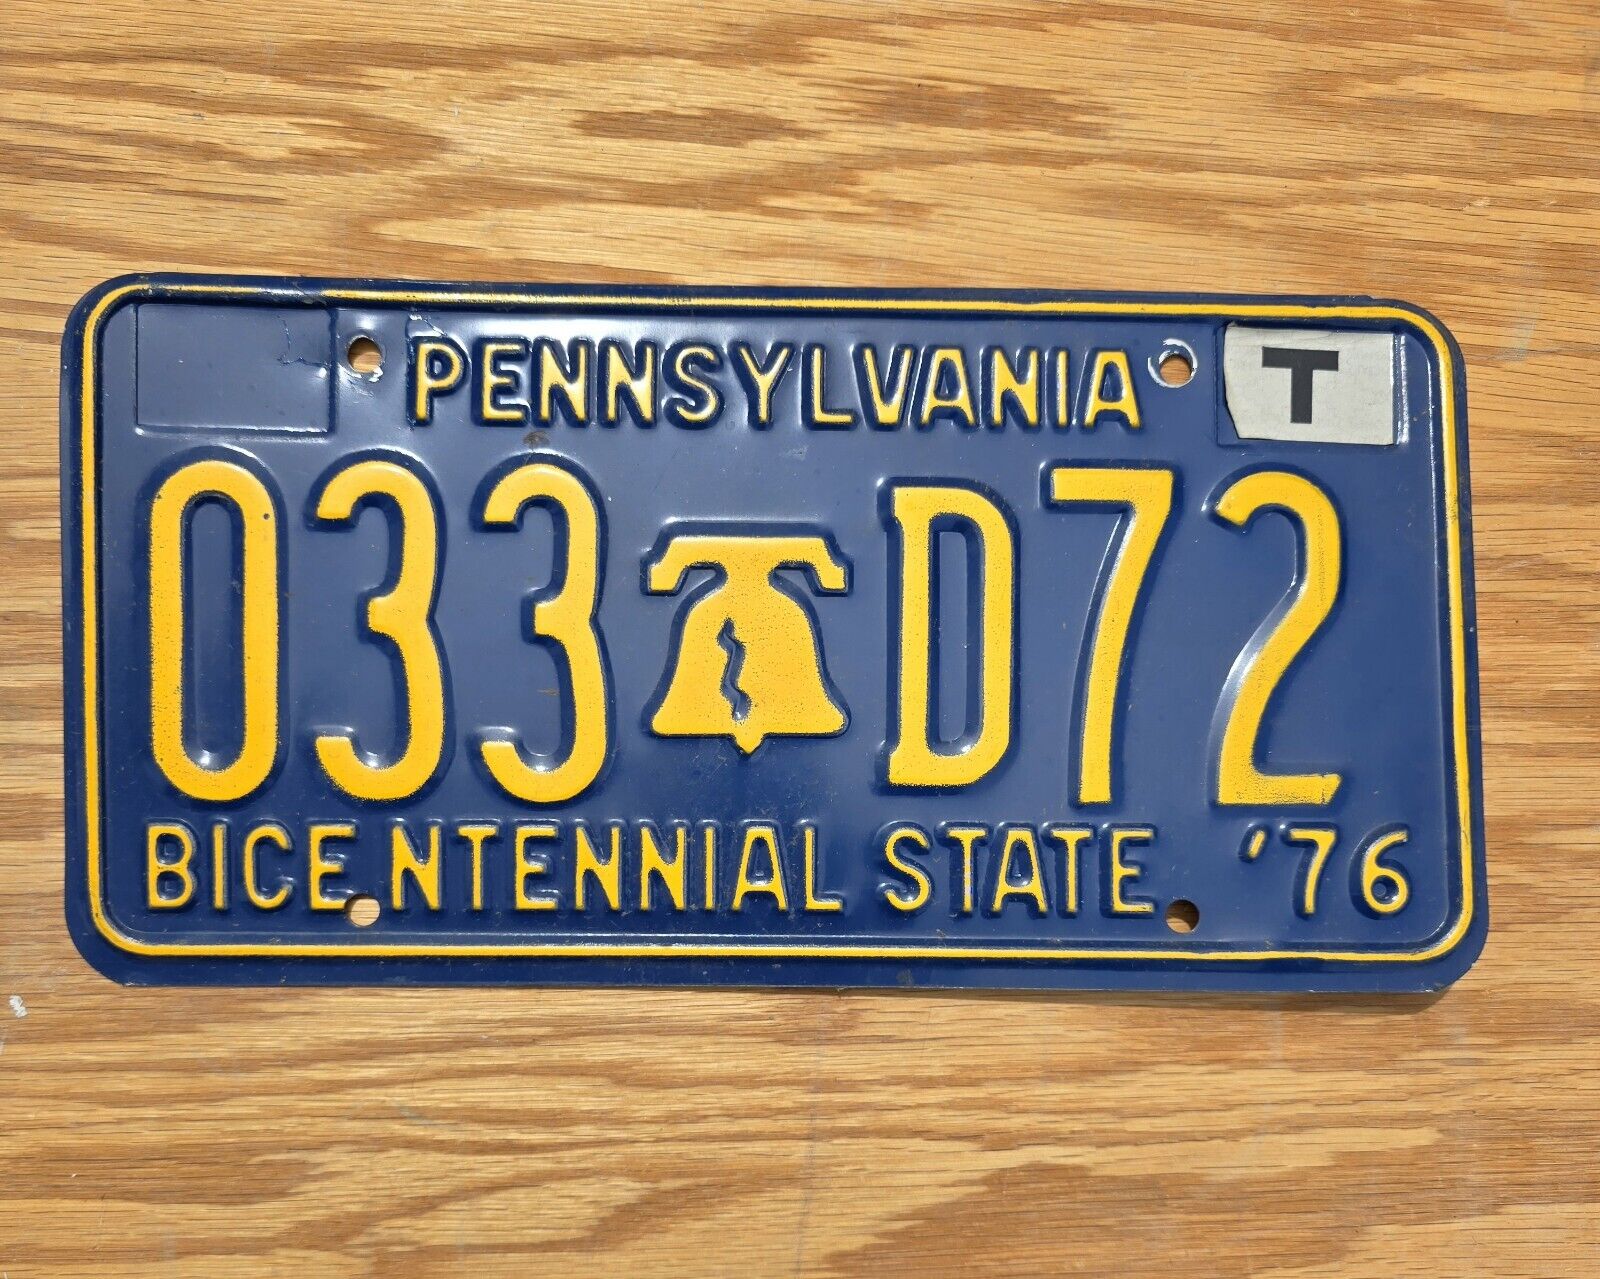 Vintage 1976 Pennsylvania Bicentennial License Plate - PA - #033-D72